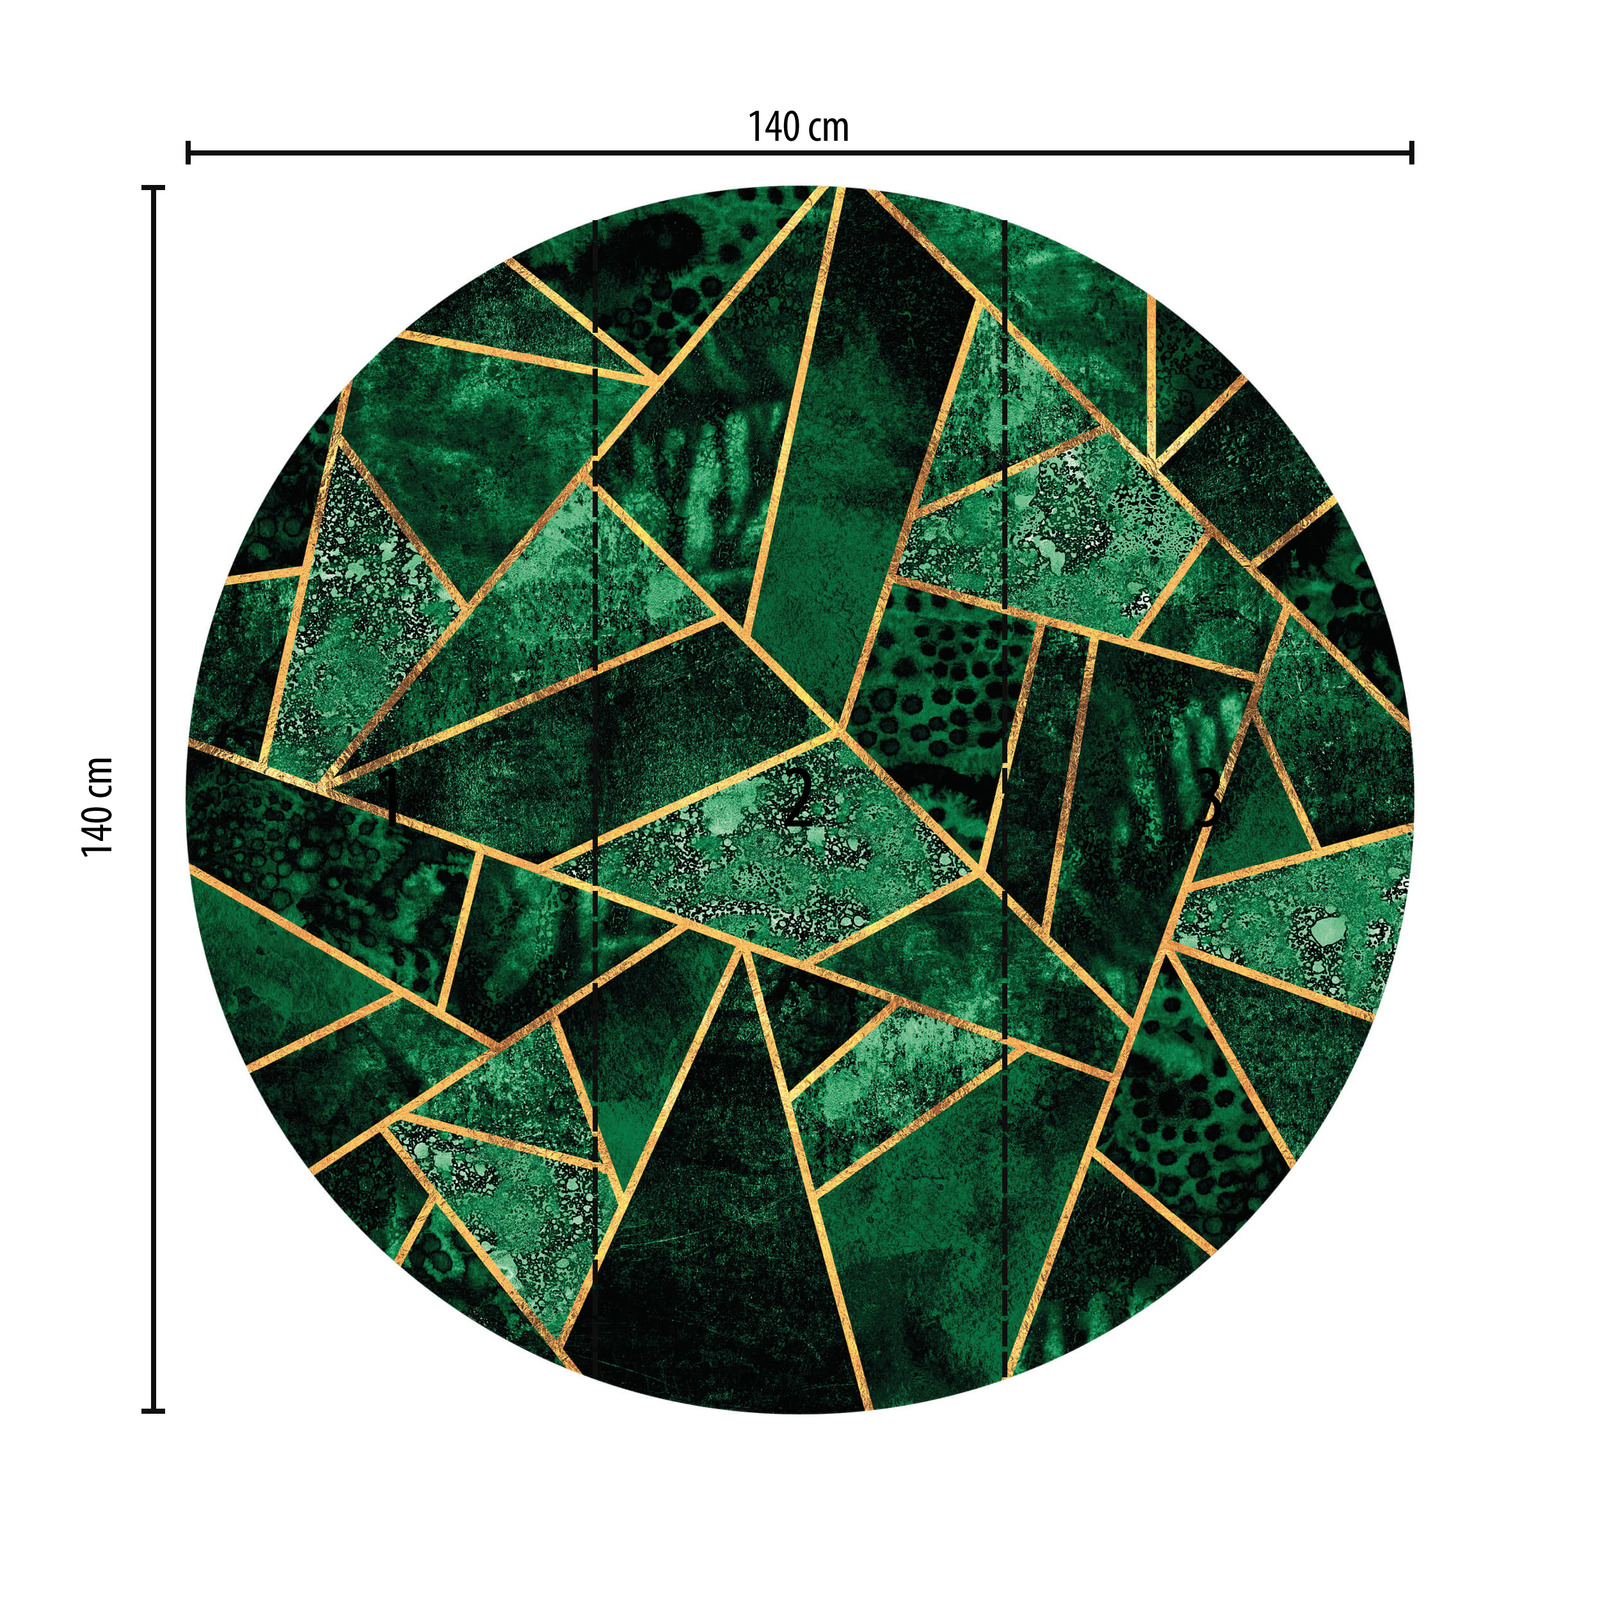             Mural de pared de formas geométricas redondas, verde
        